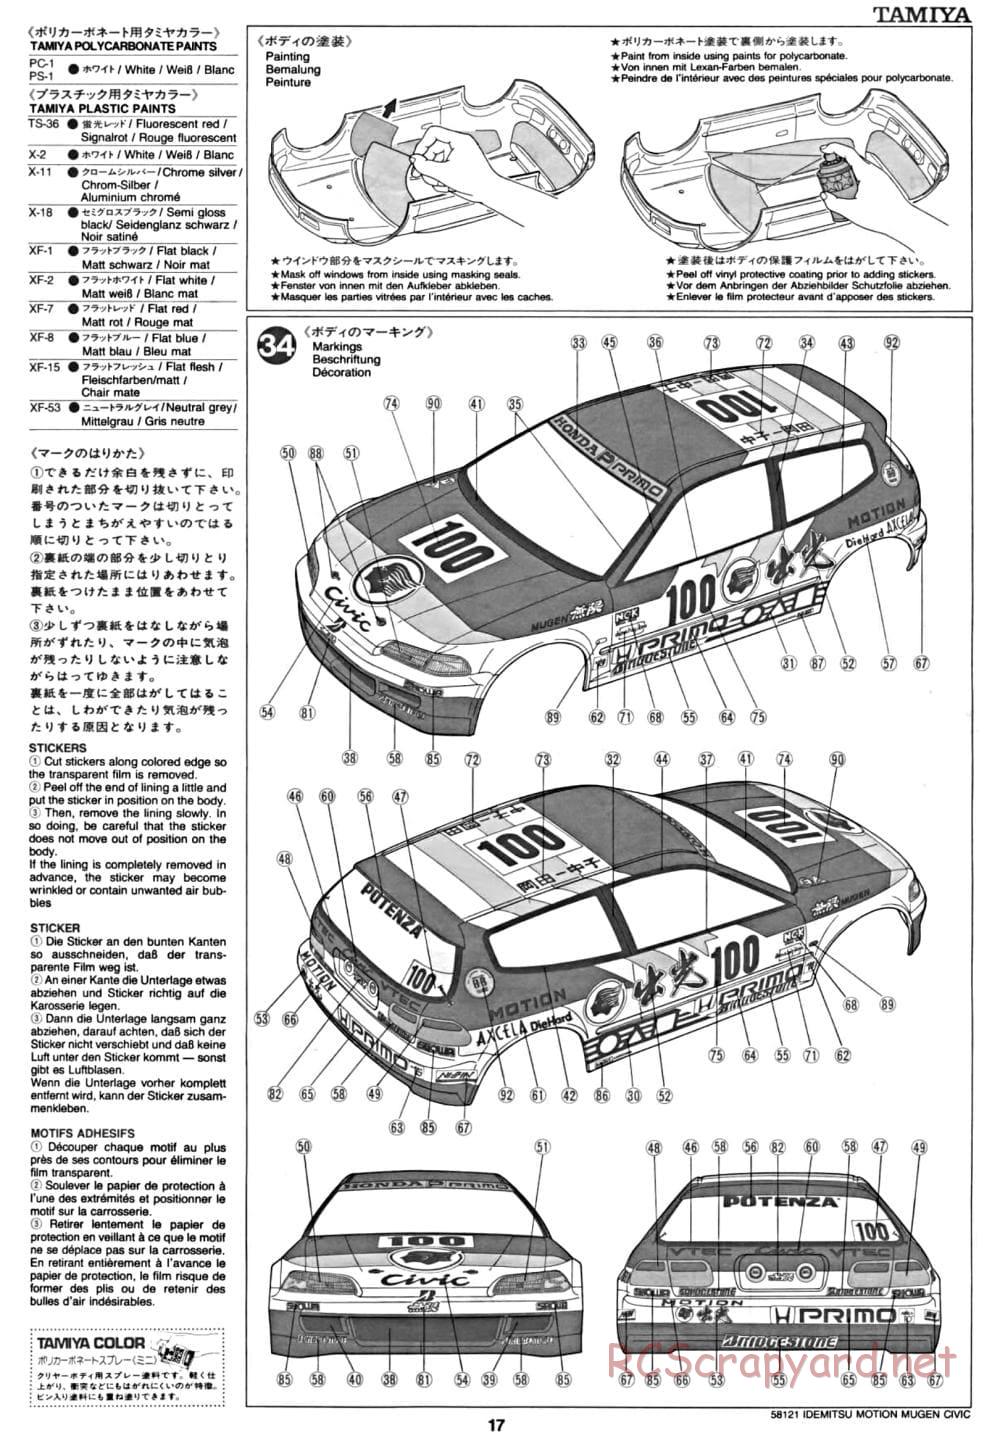 Tamiya - Idemitsu Motion Mugen Civic - FF-01 Chassis - Manual - Page 17